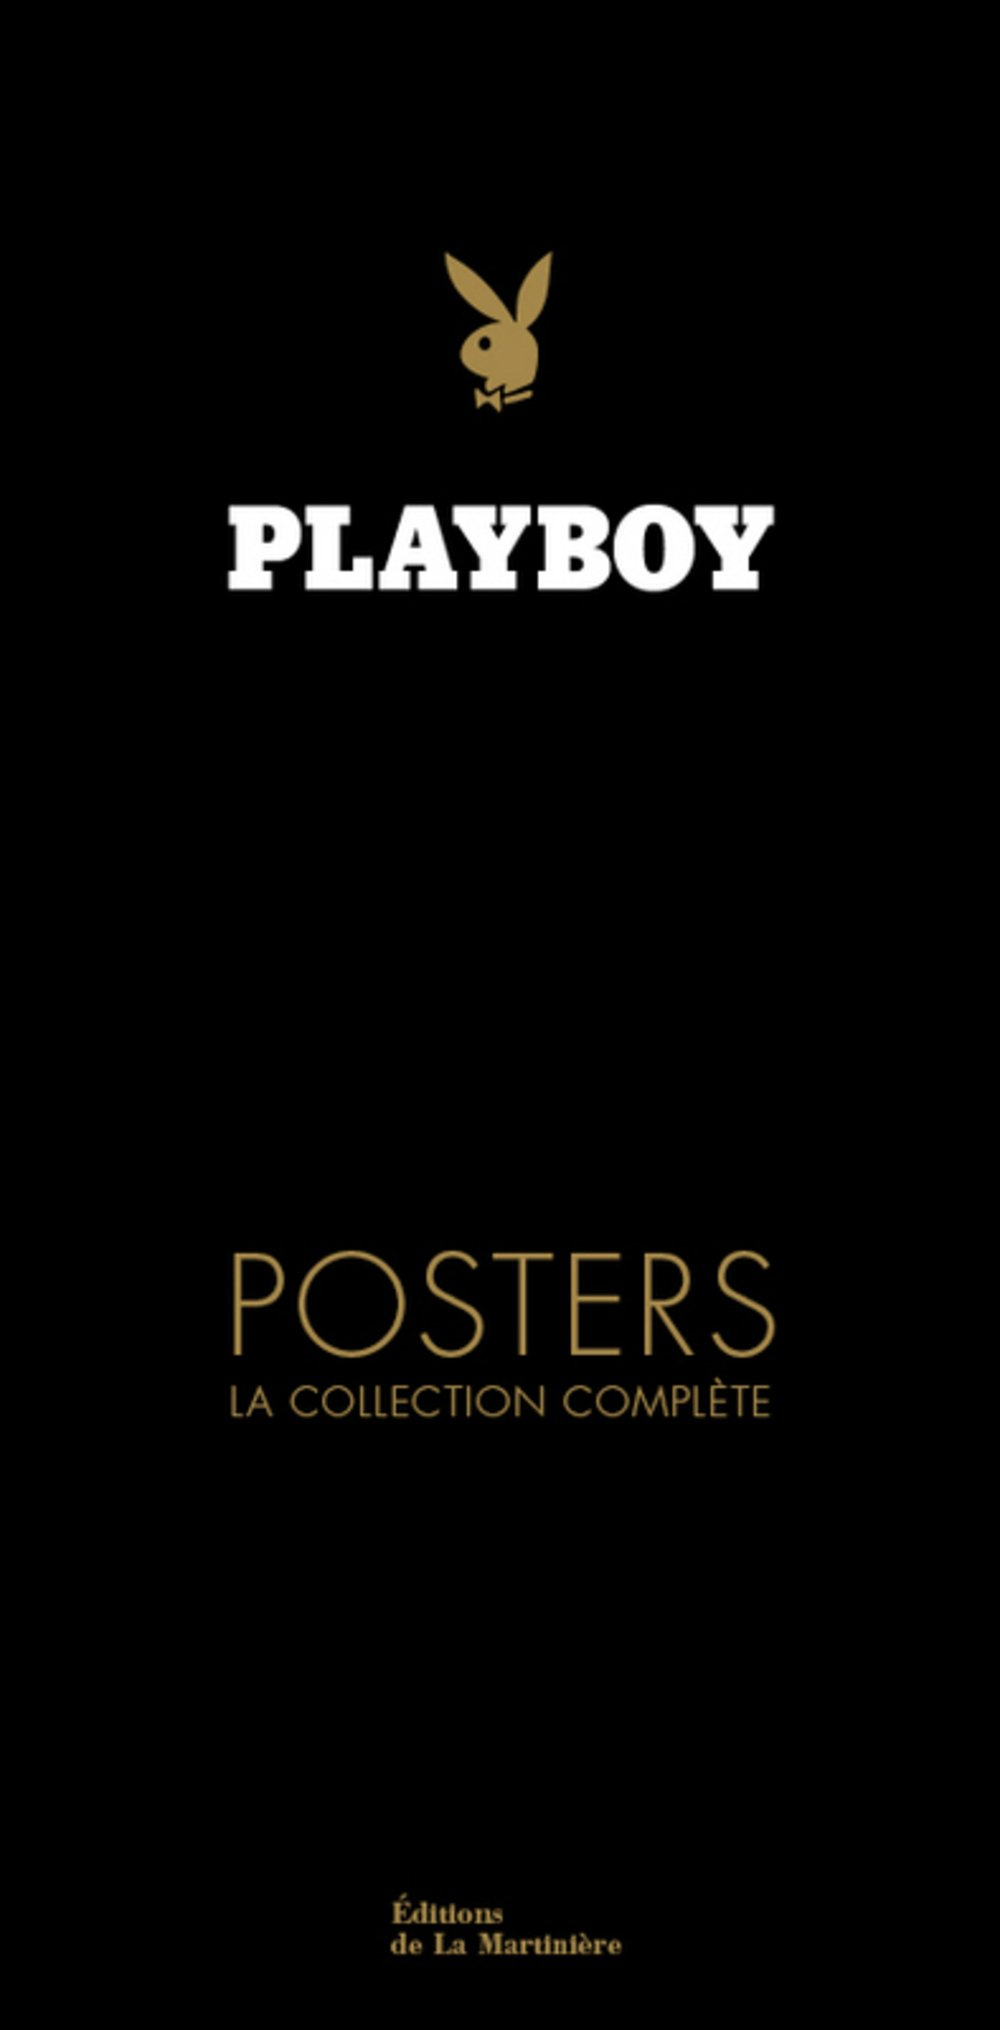 Playboy posters : la collection complète